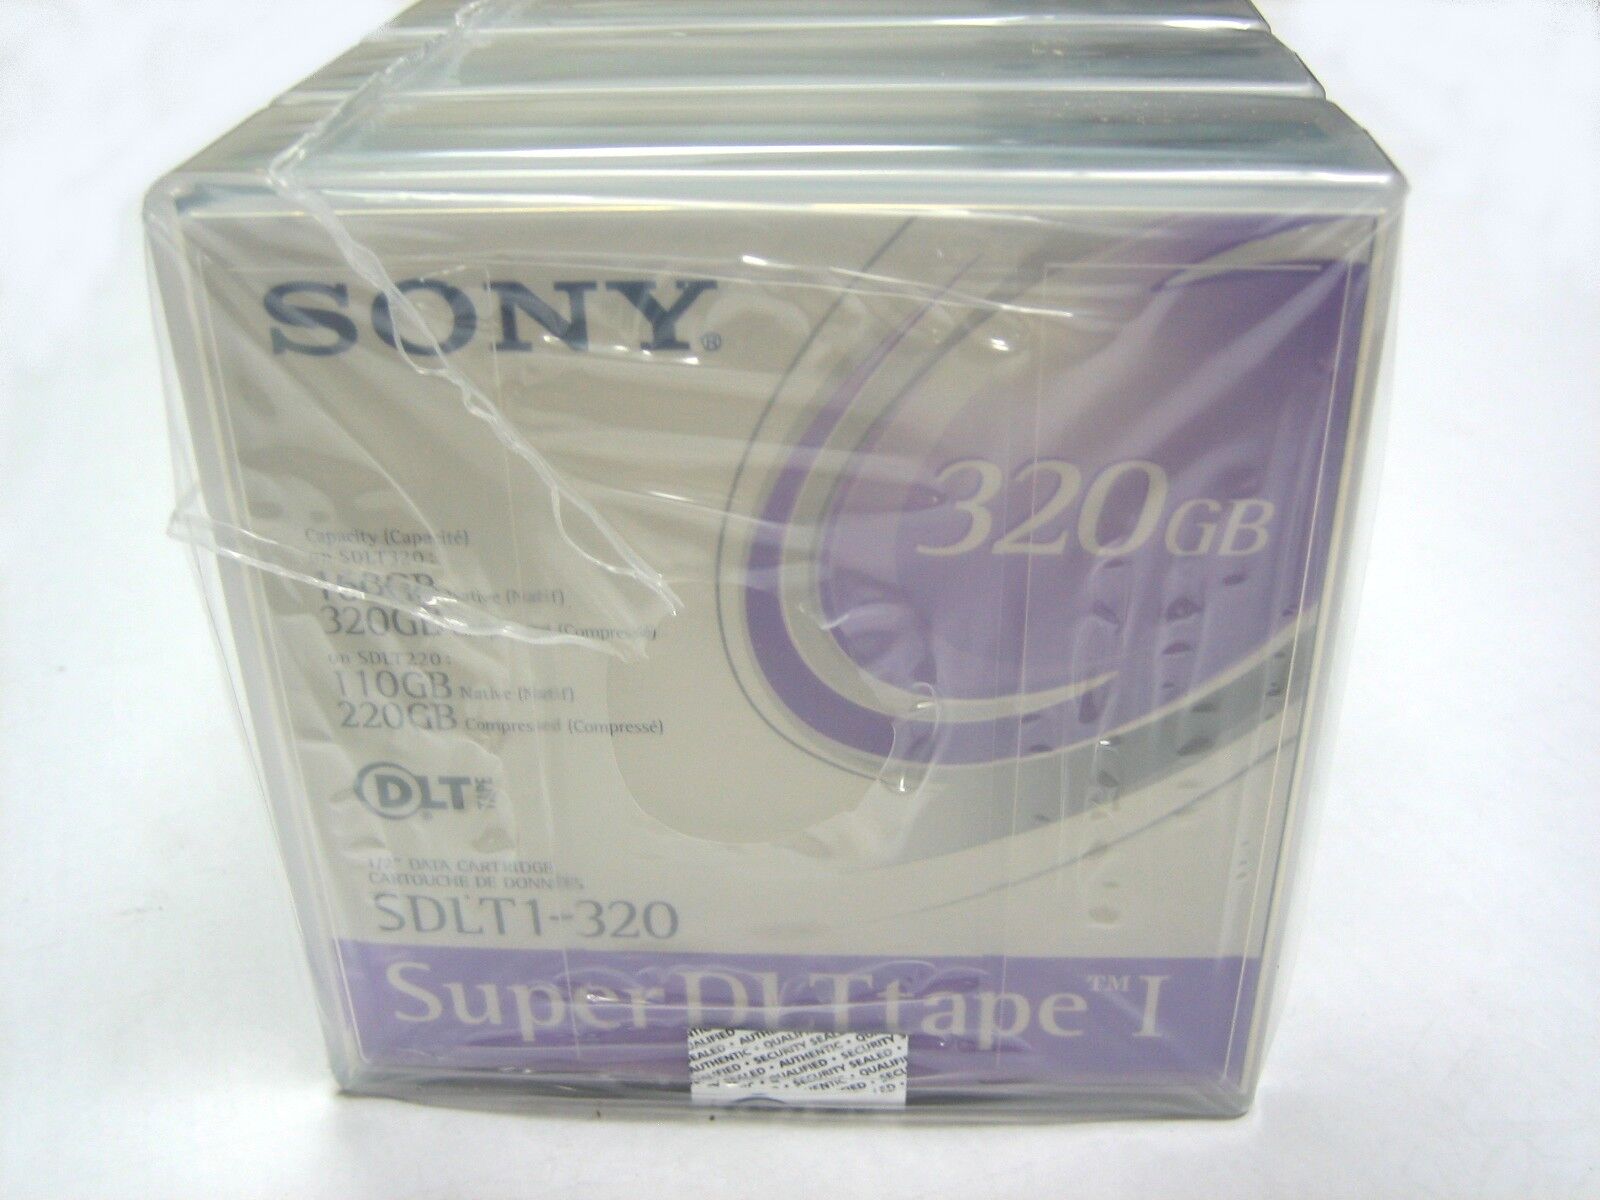 3 New SONY SDLT1-320 Super Data Cartridge 160/320GB Super DLT tape-I, Sales